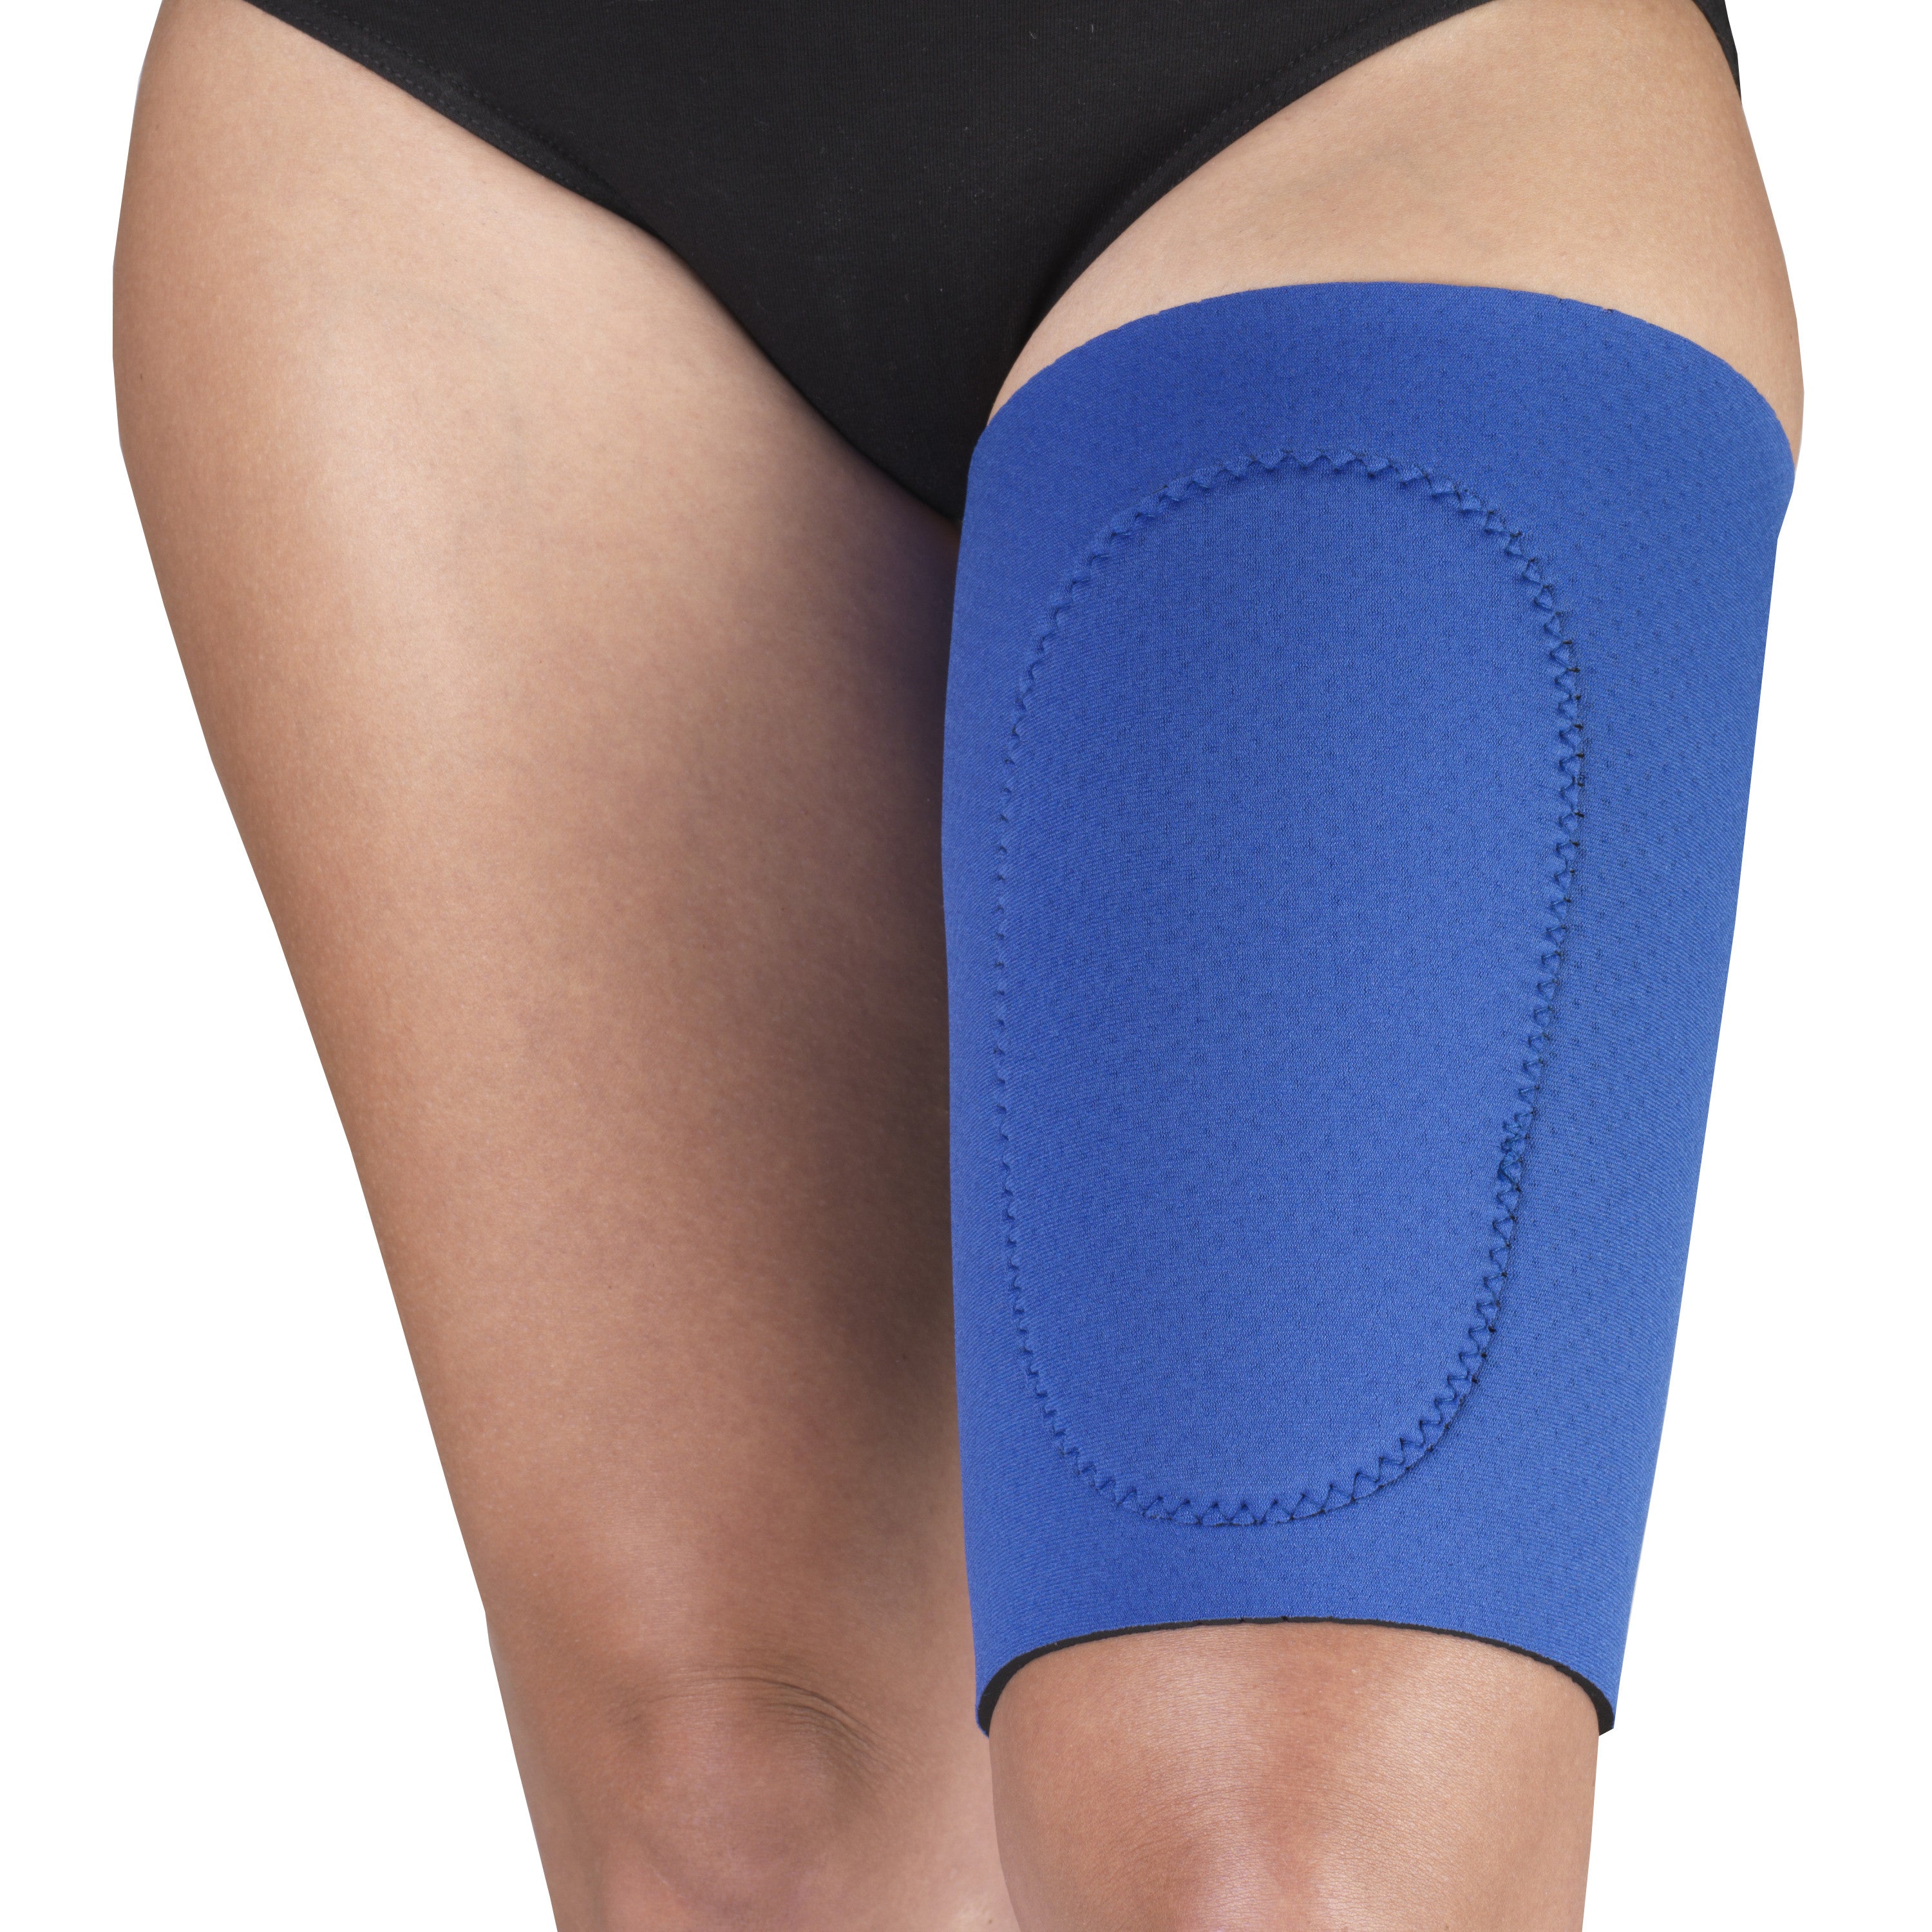 OTC Neoprene Knee Support - Oval Pad, Blue, Small